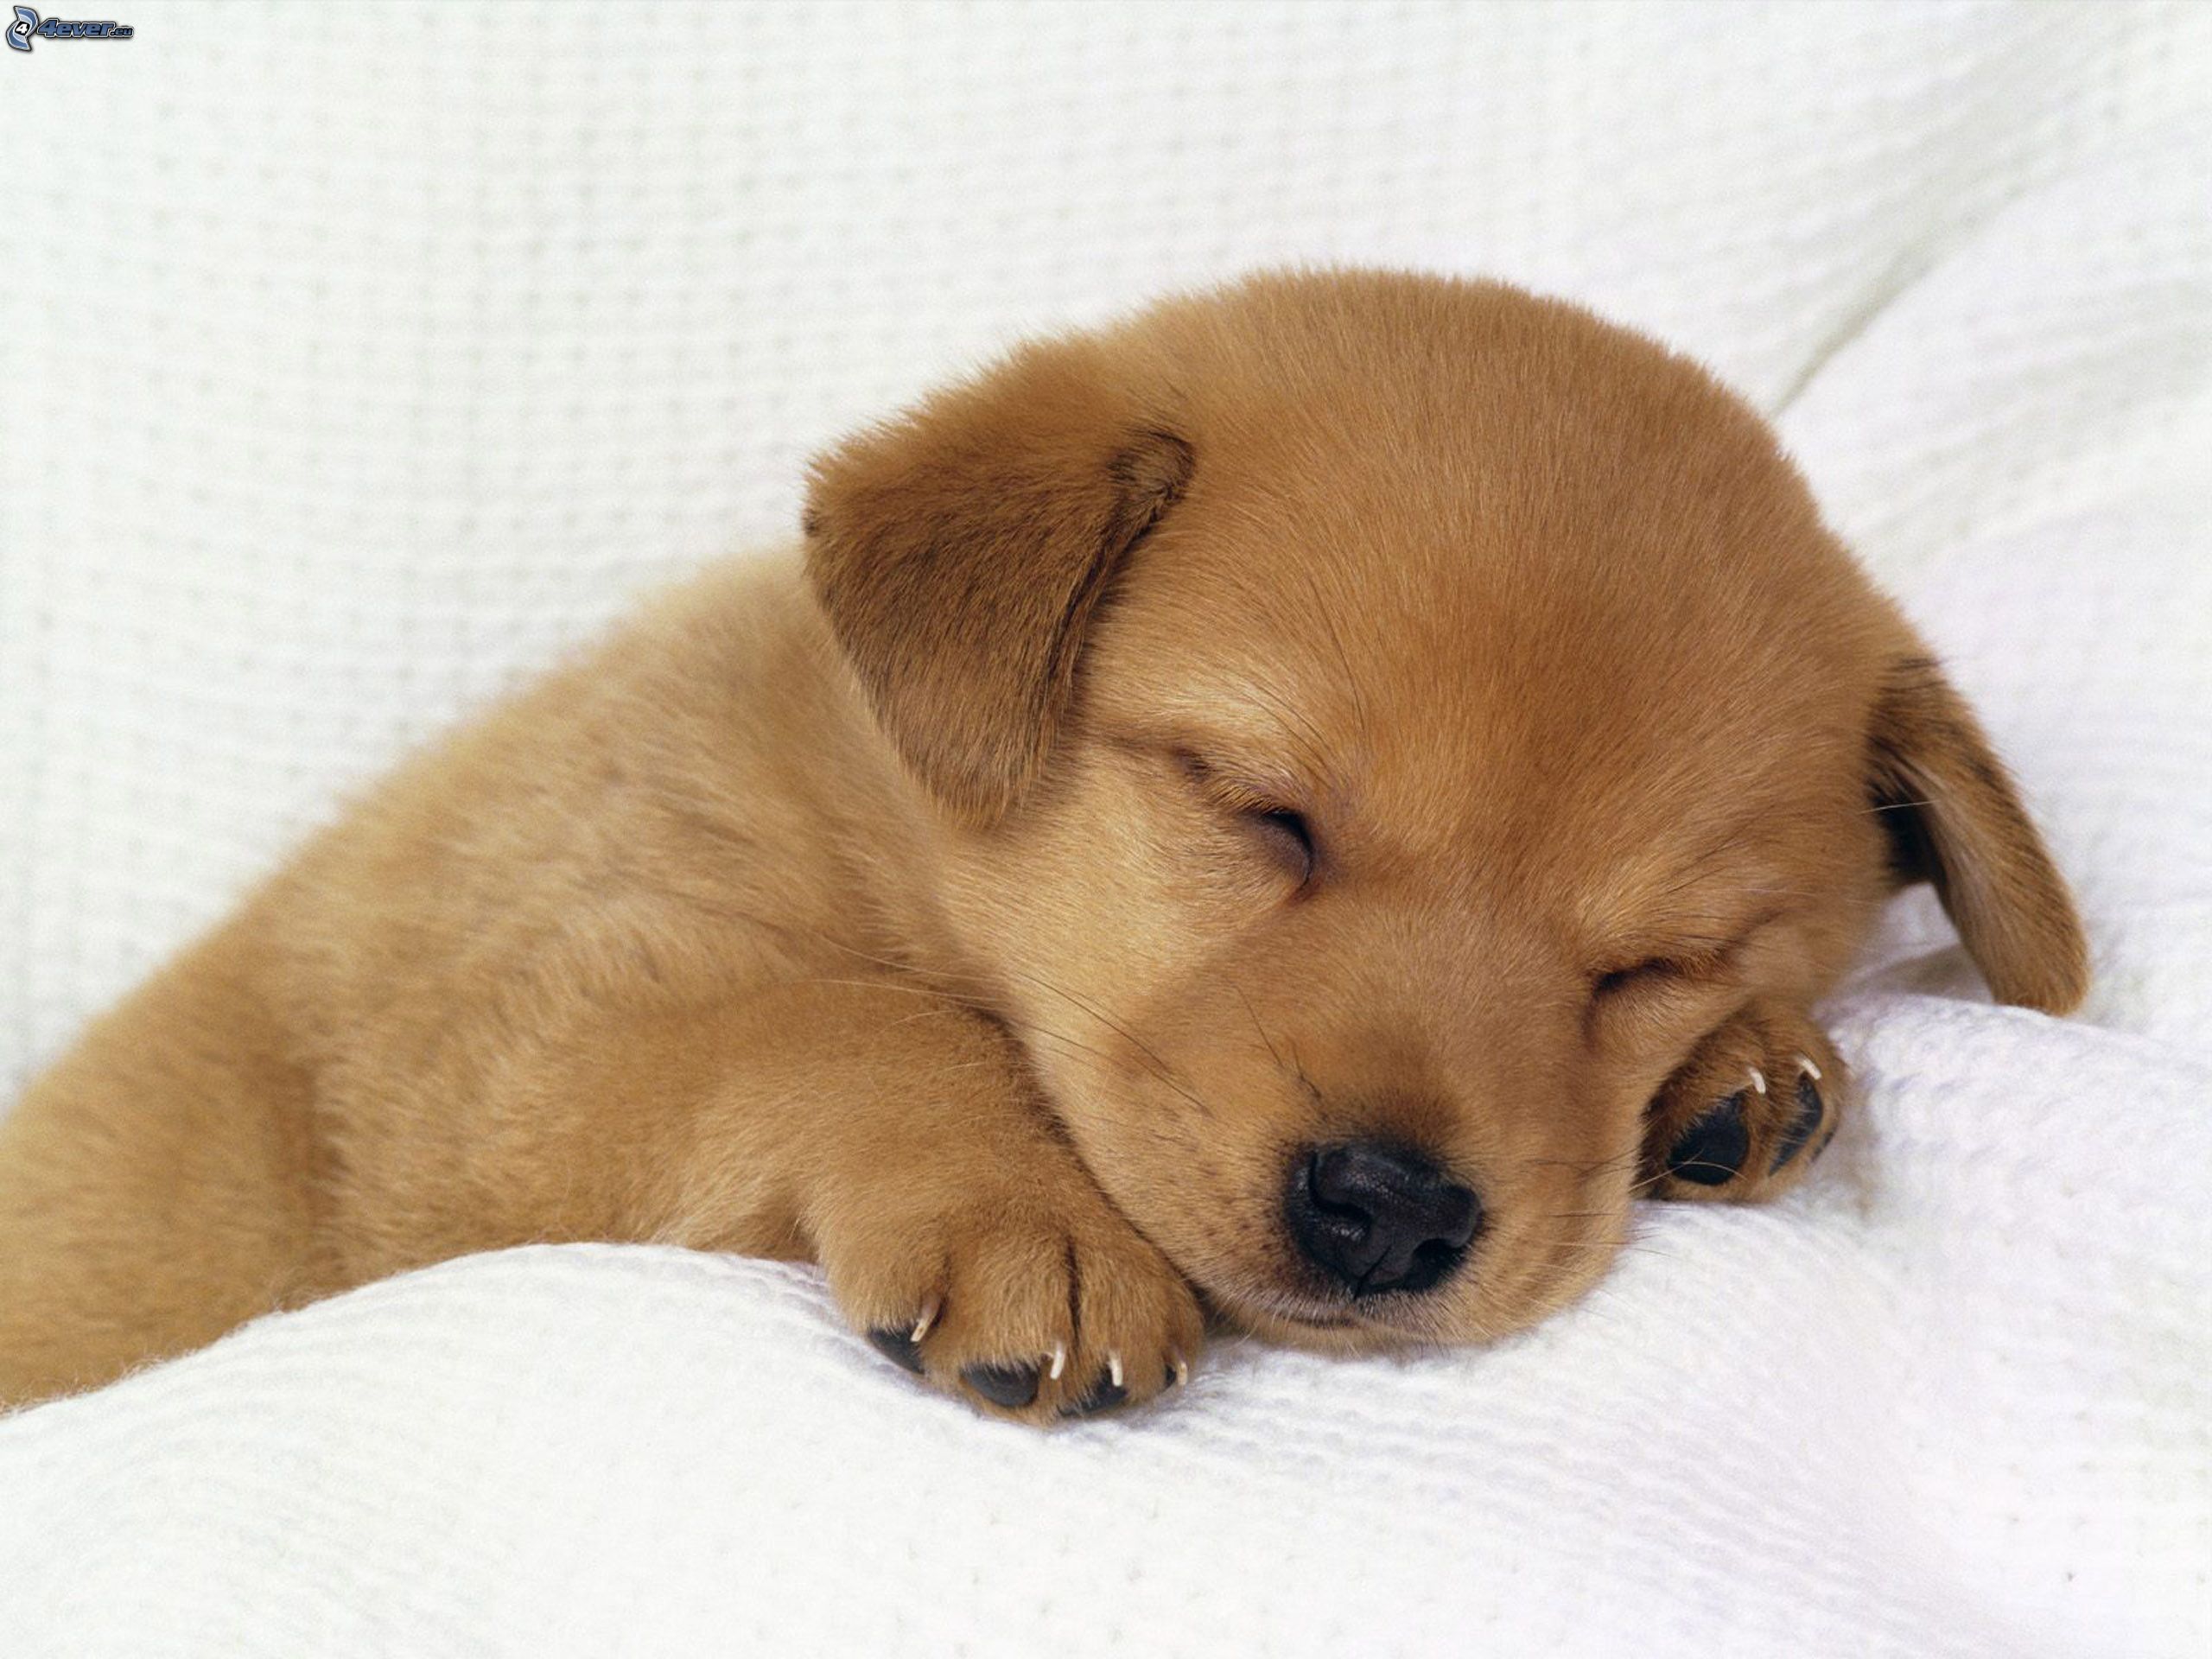 Cute Sleeping Golden Retriever Puppies. Baby animals picture, Puppies, Sleeping puppies